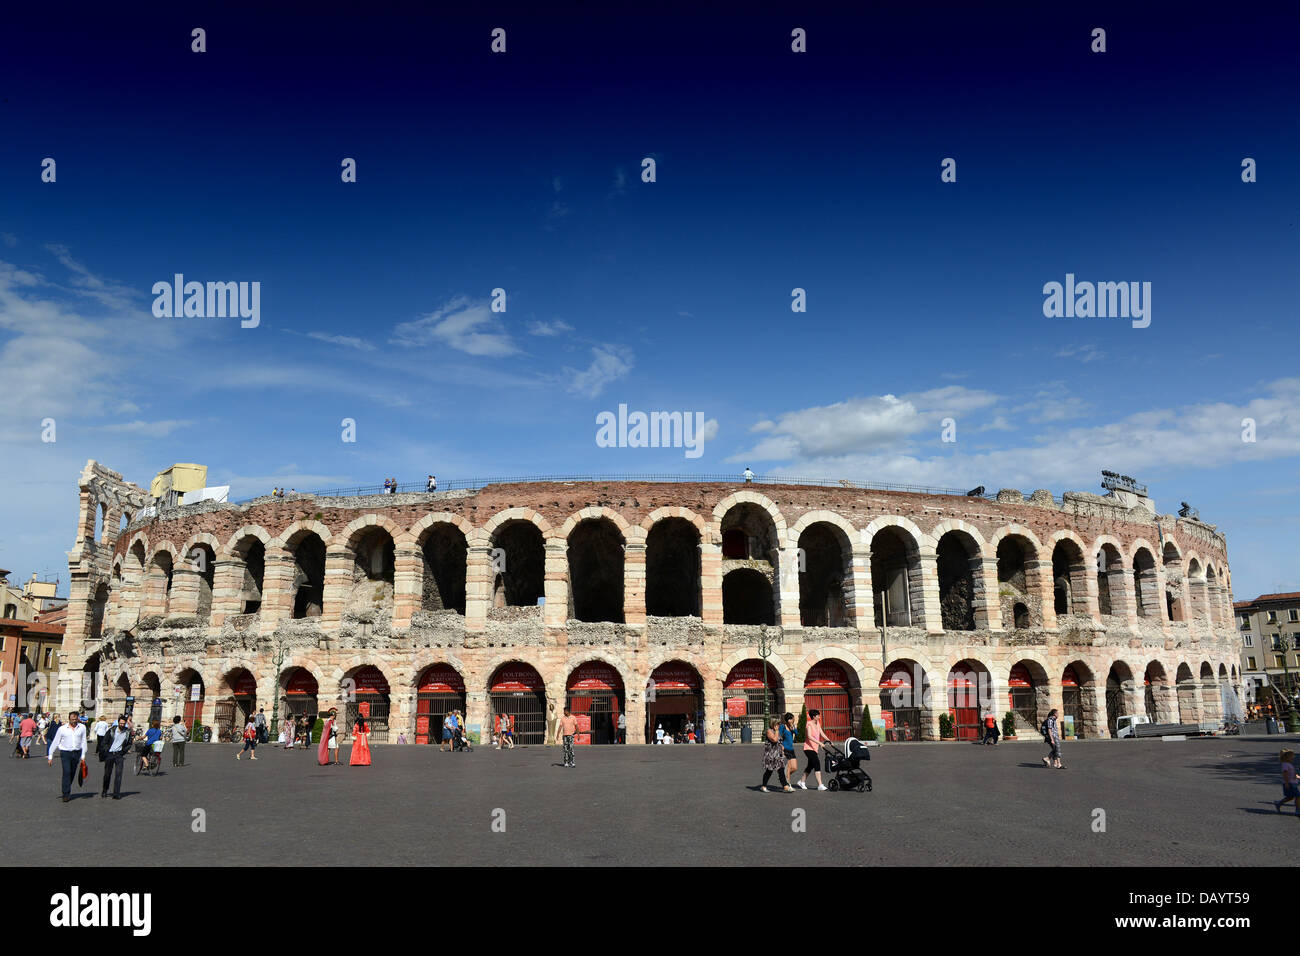 Verona Italy The Verona Arena (Arena di Verona) a Roman amphitheatre in Piazza Bra in Verona Italy Stock Photo